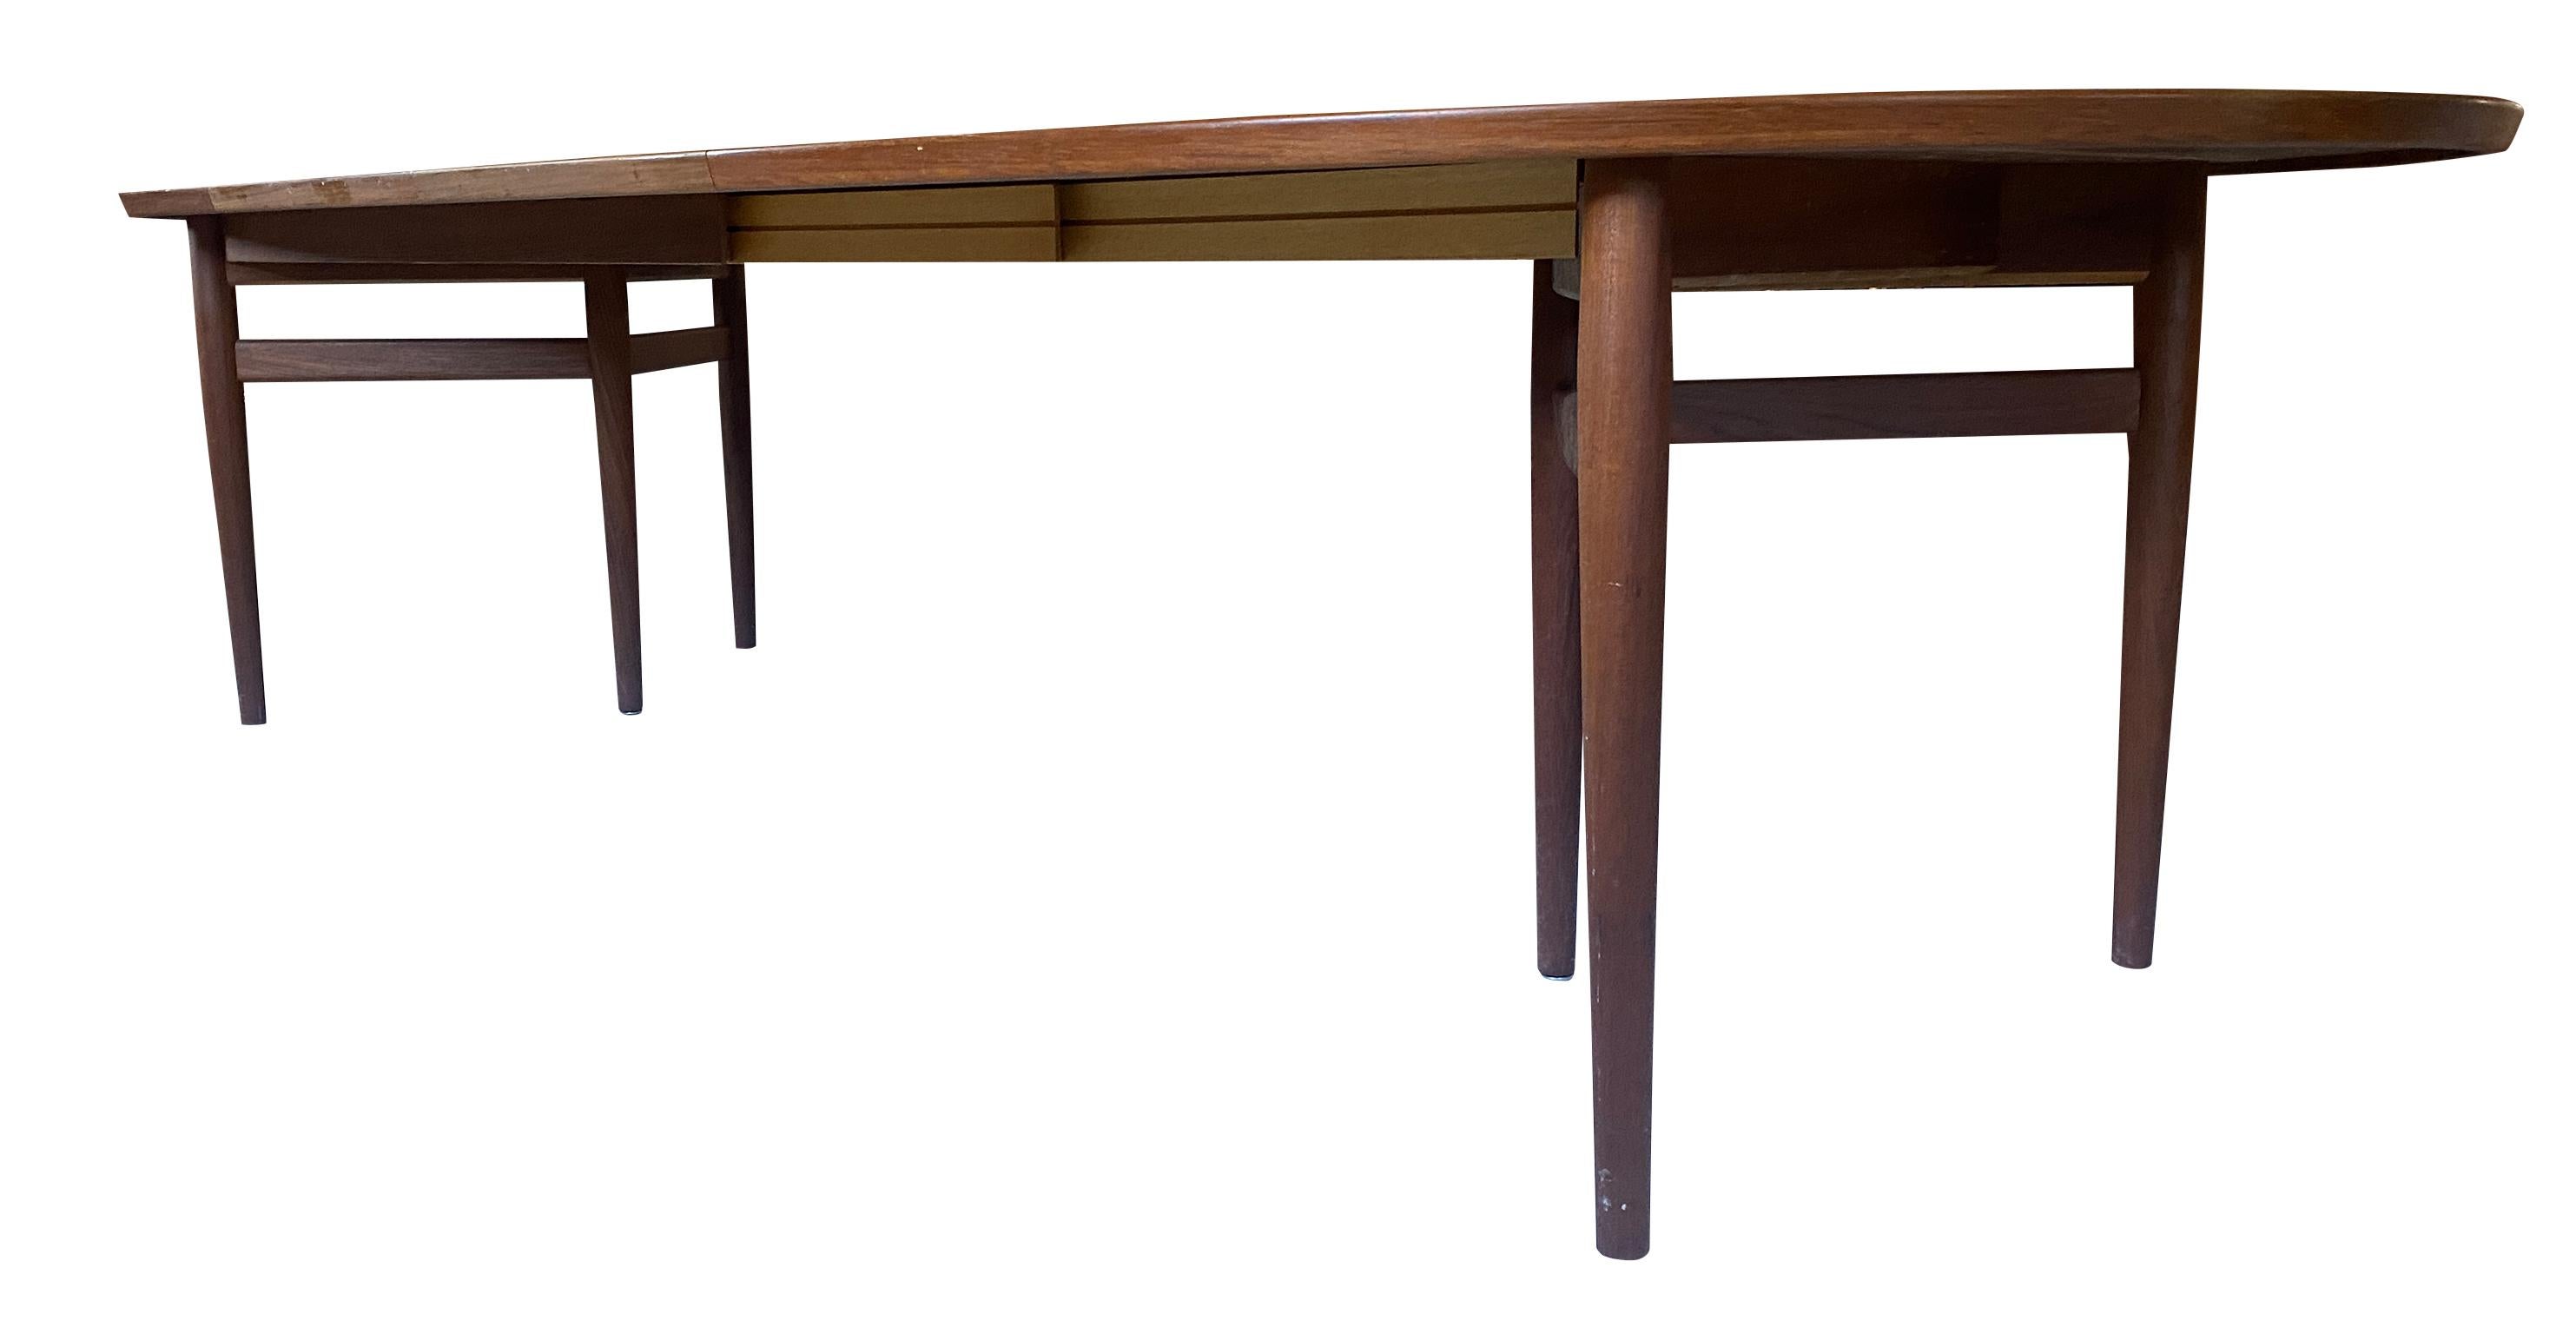 Woodwork Midcentury Elliptical Danish Teak Expandable Dining Table by Arne Vodder No. 212